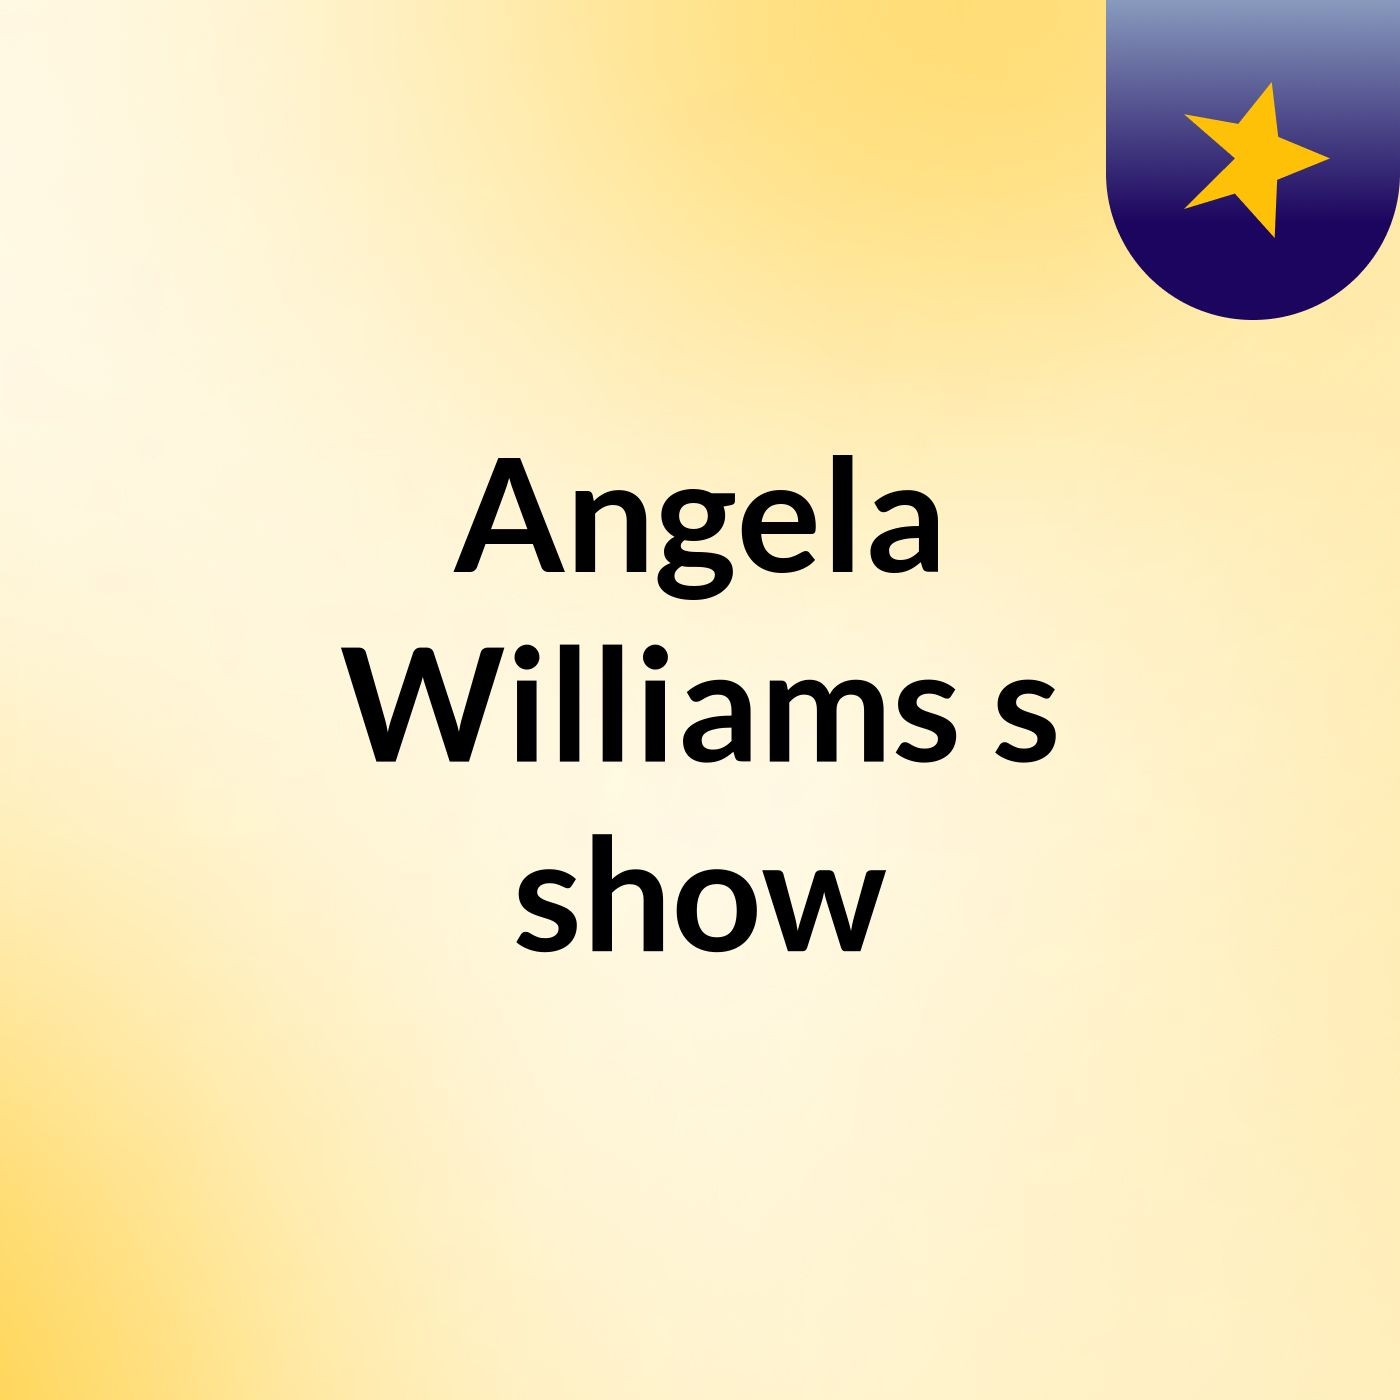 Episode 5 - Angela Williams's show